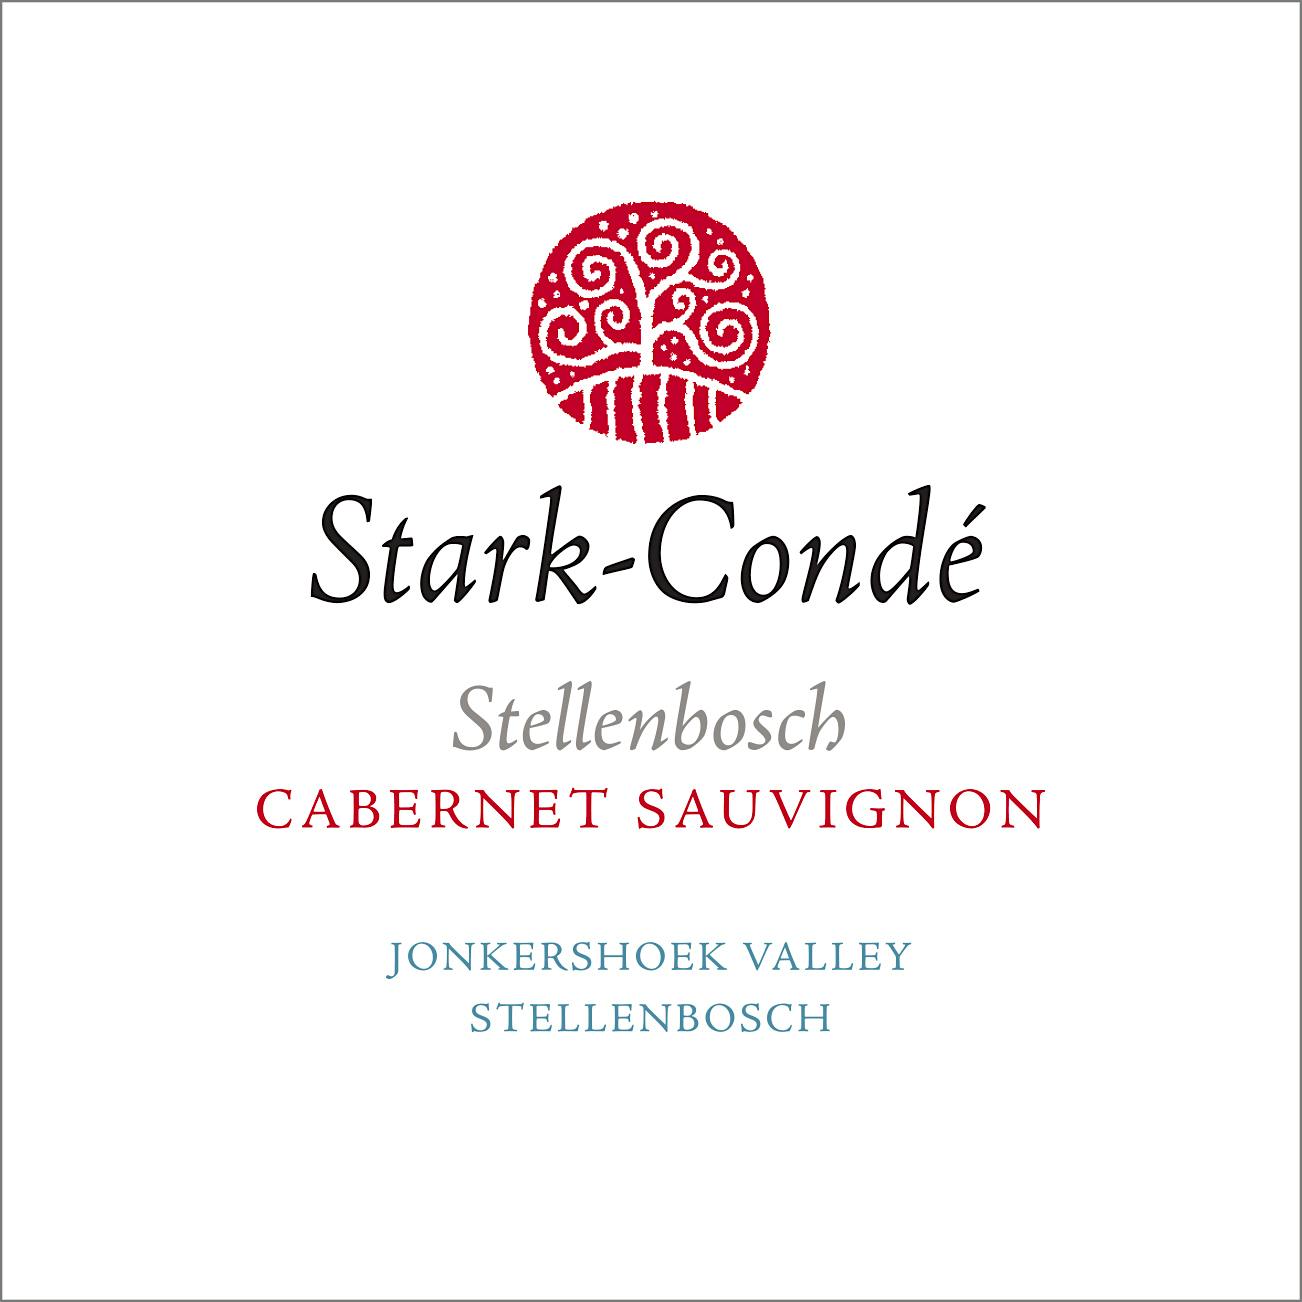 Label for Stark-Condé